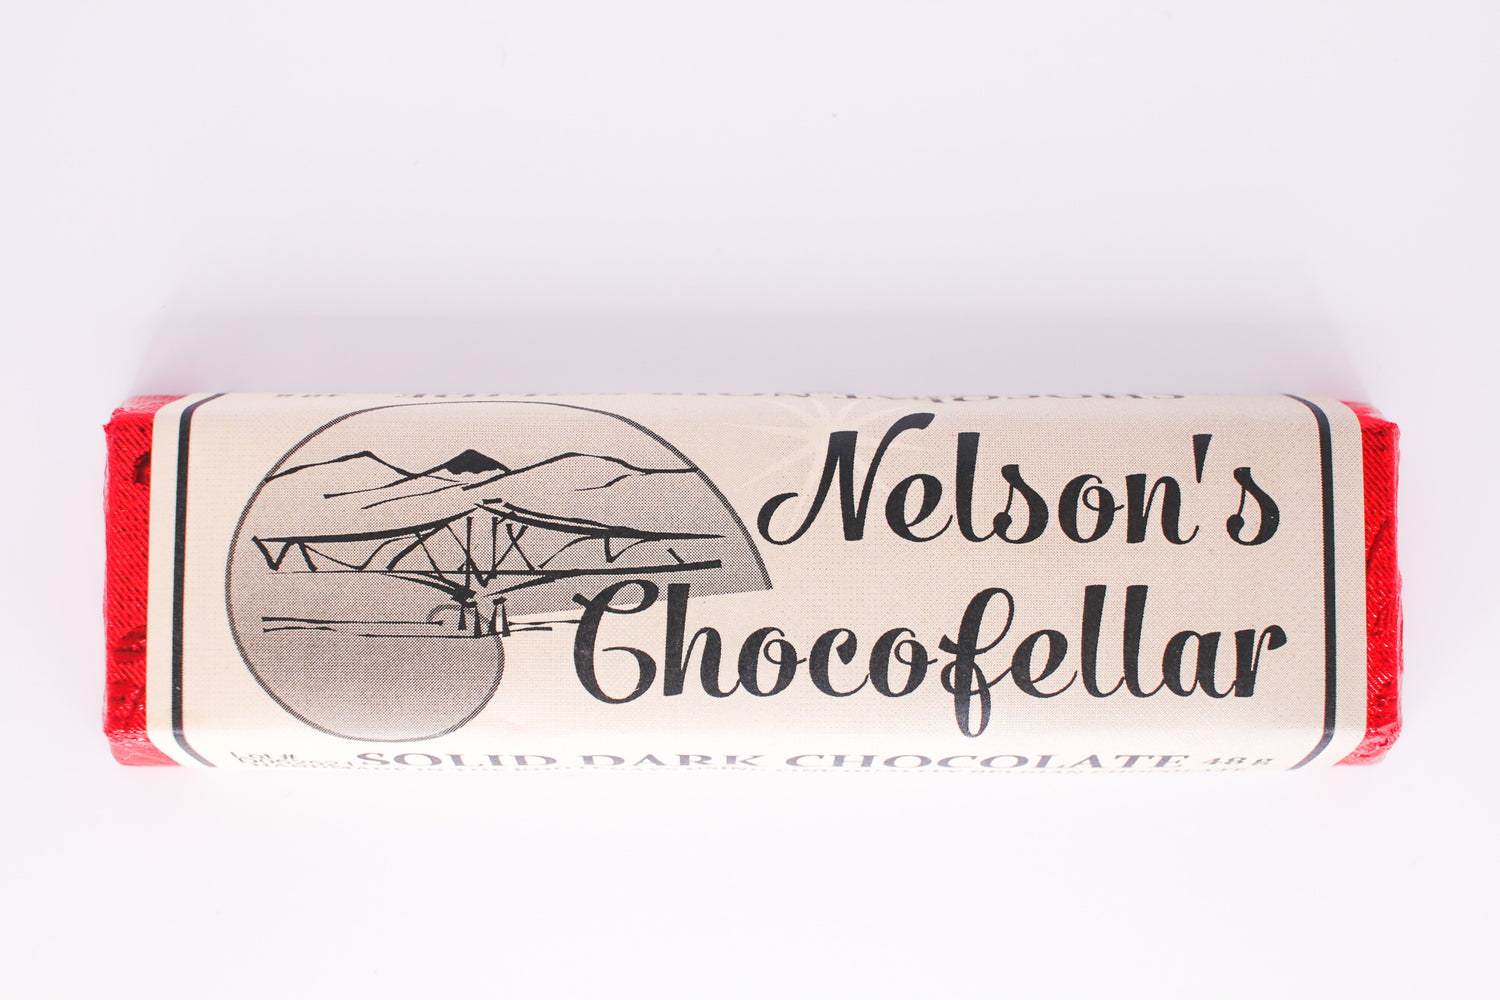 Solid dark chocolate bar handmade by Nelson's Chocofellar